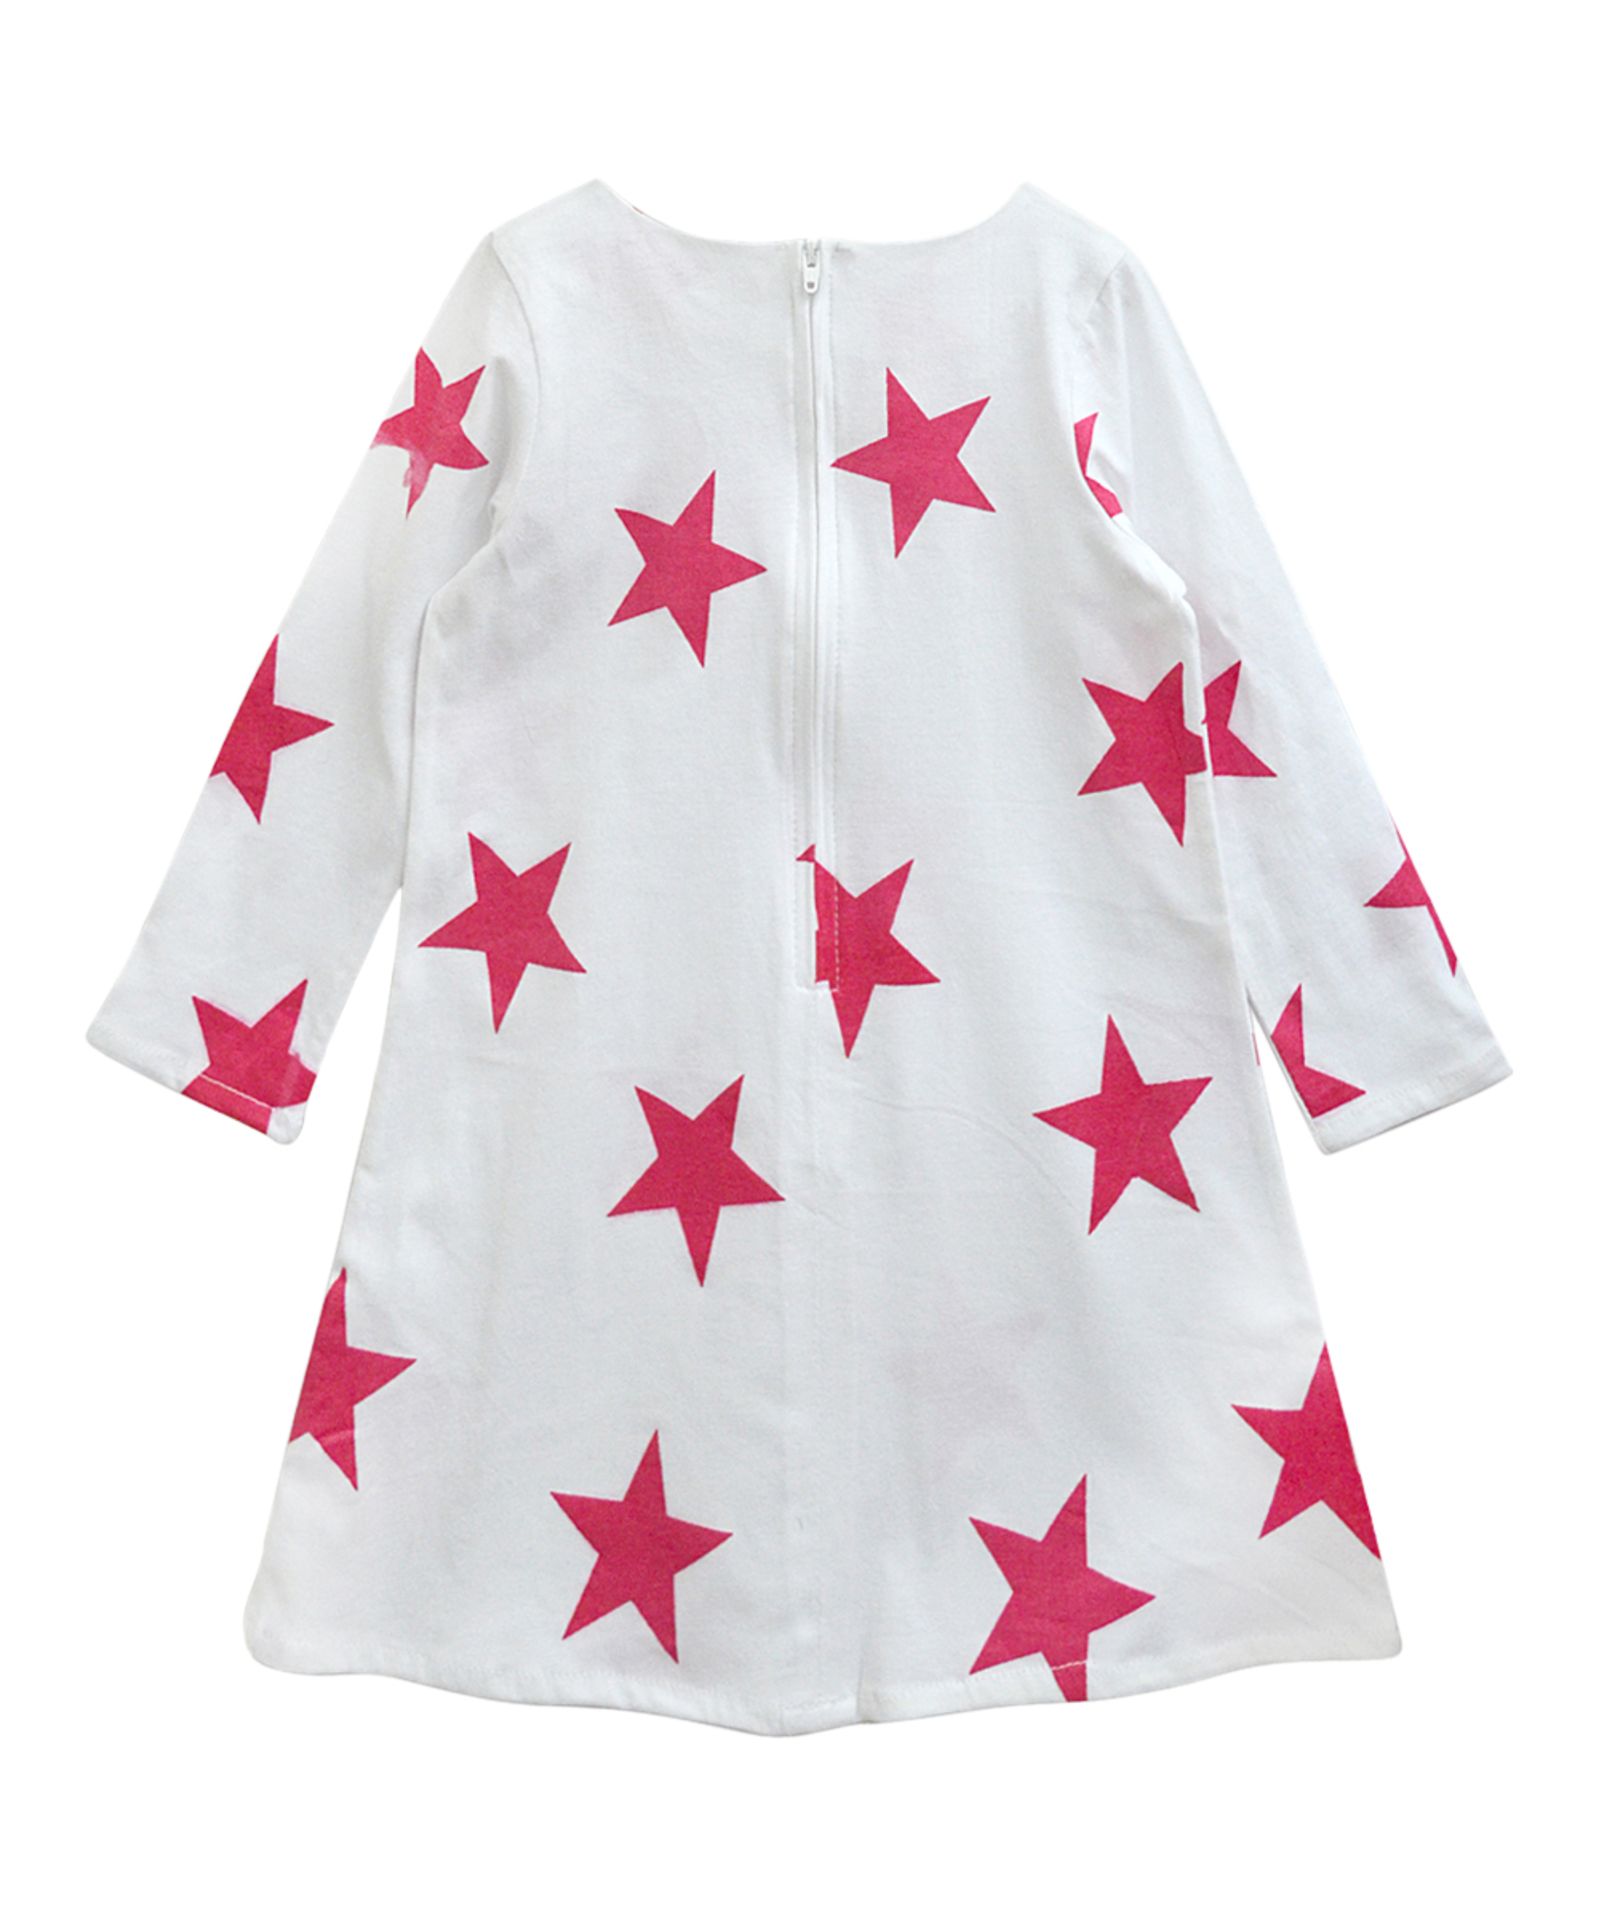 White& Pink Star Aurora Dress - Infant, Toddler & Girls - Image 2 of 2